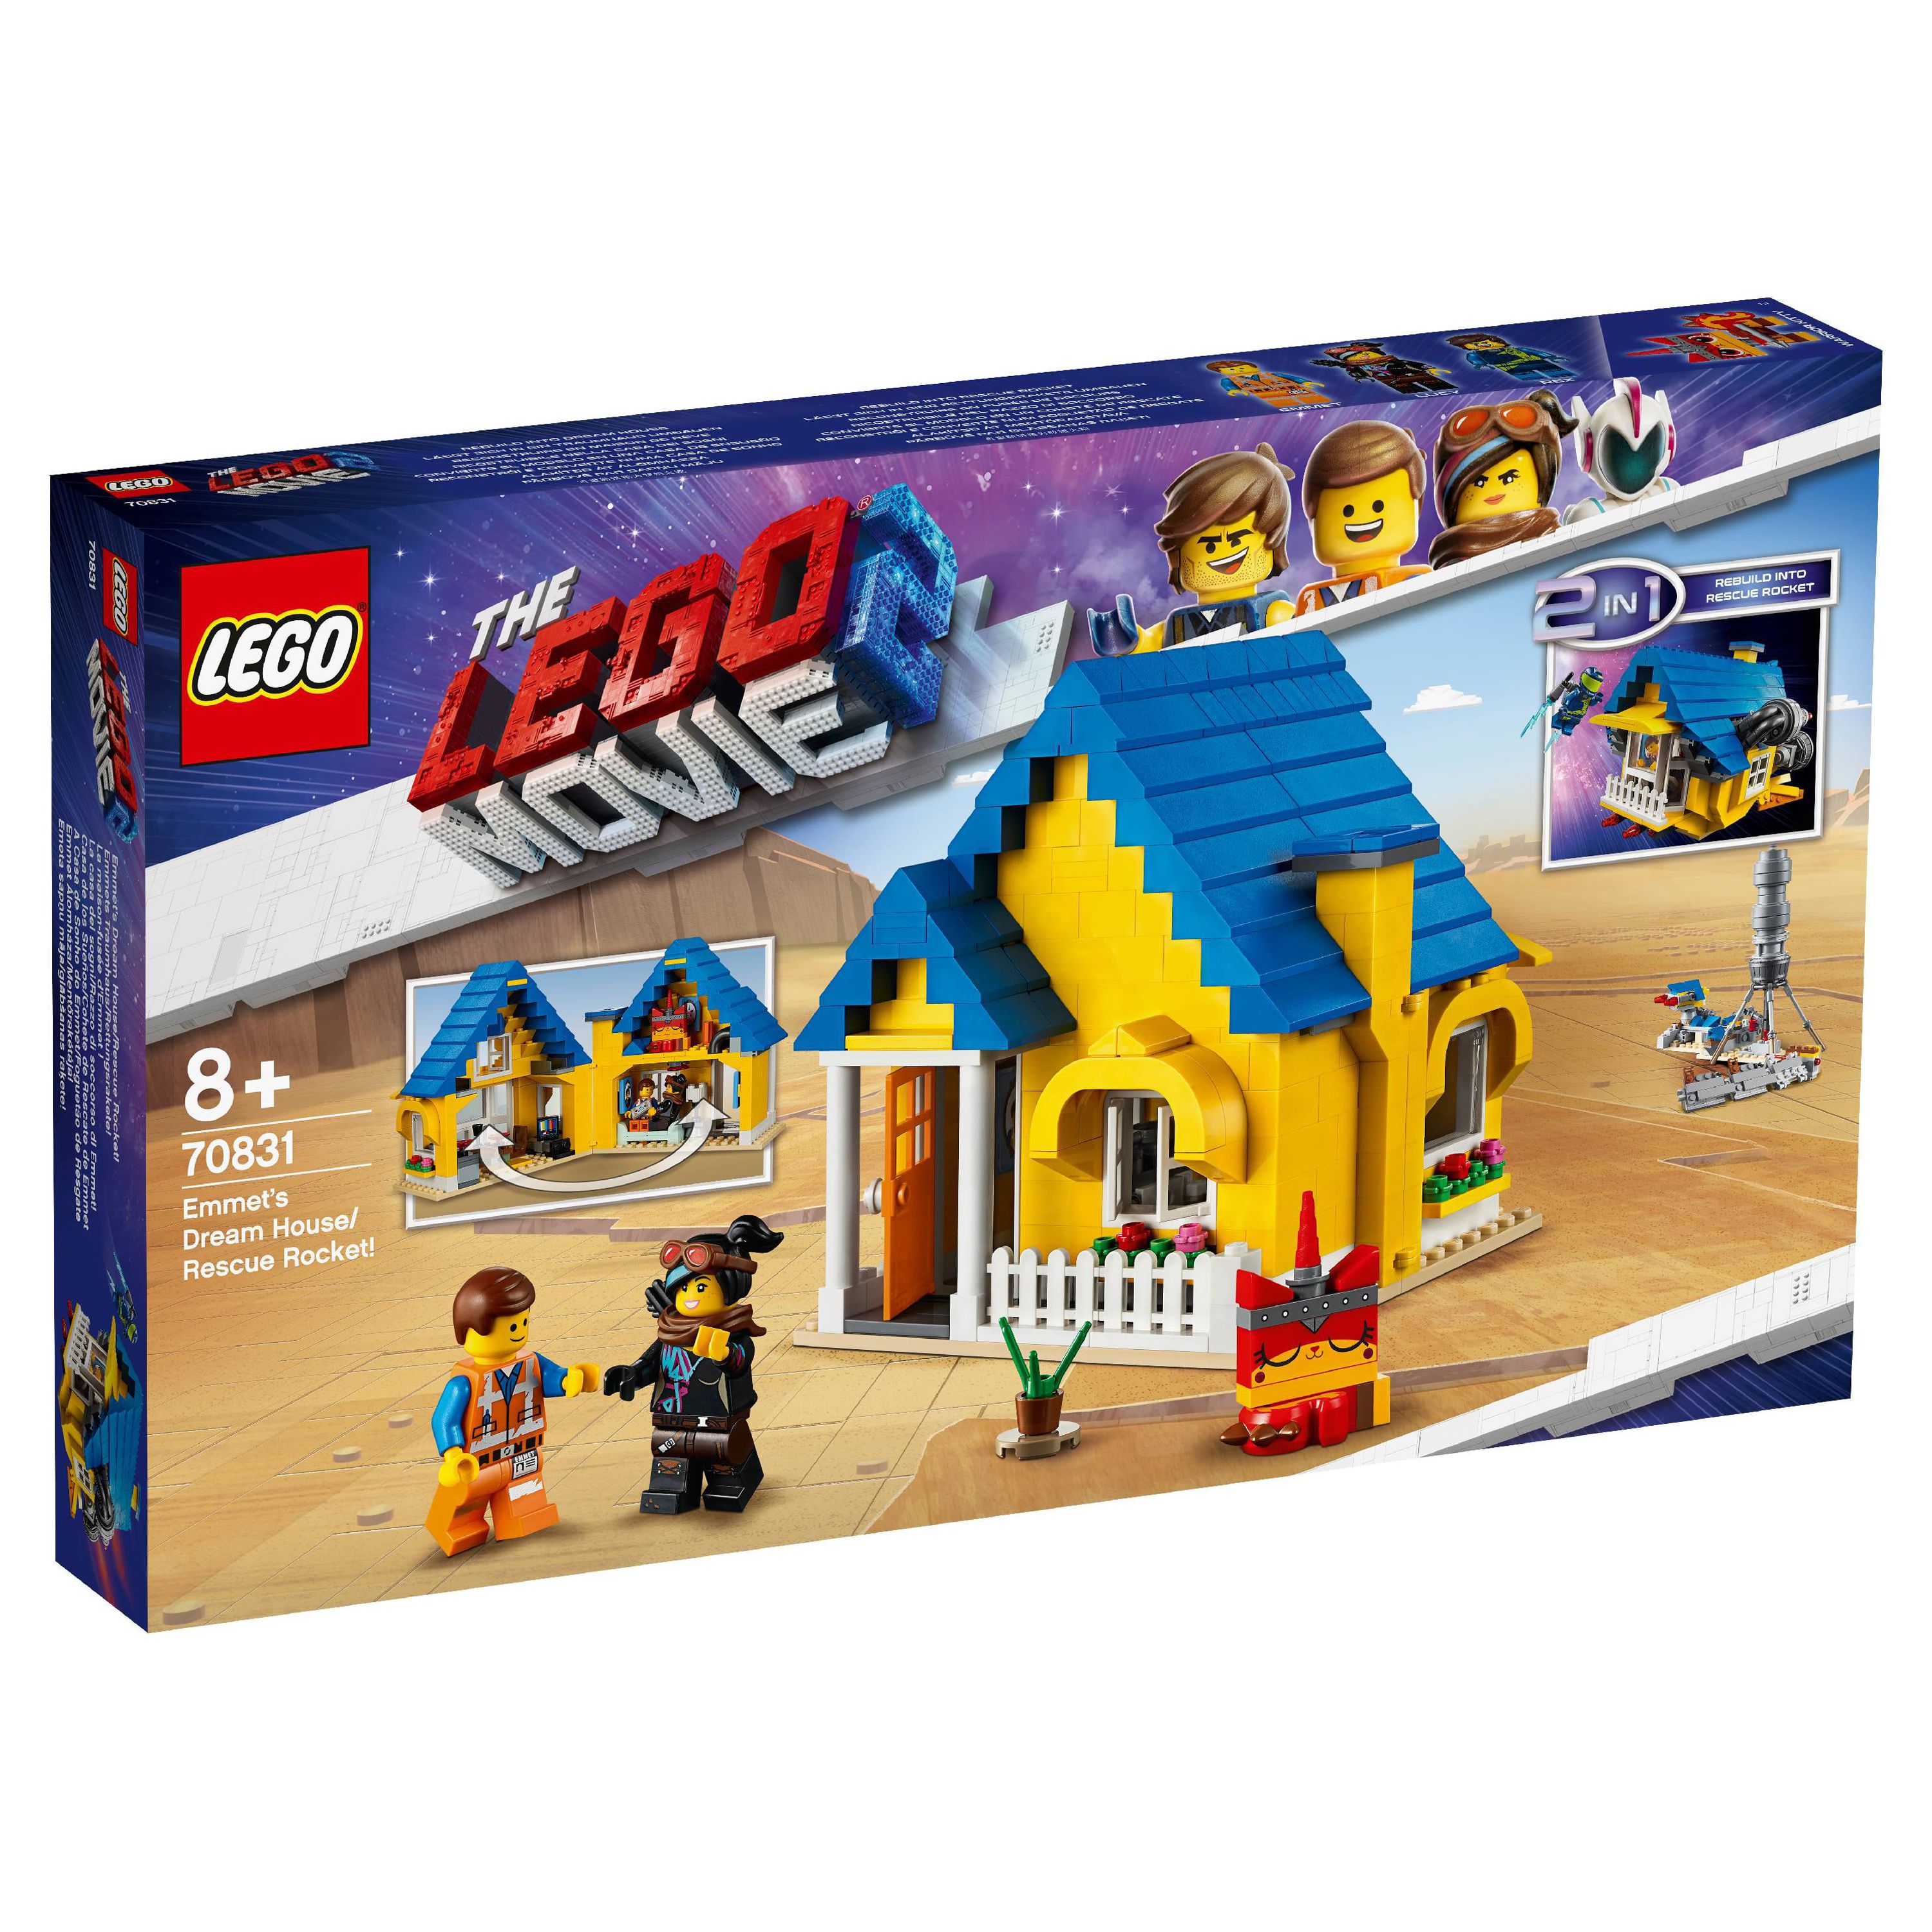 LEGO 70831 The LEGO Movie 2 Emmet's Dream House/Rescue Rocket. - image 4 of 7